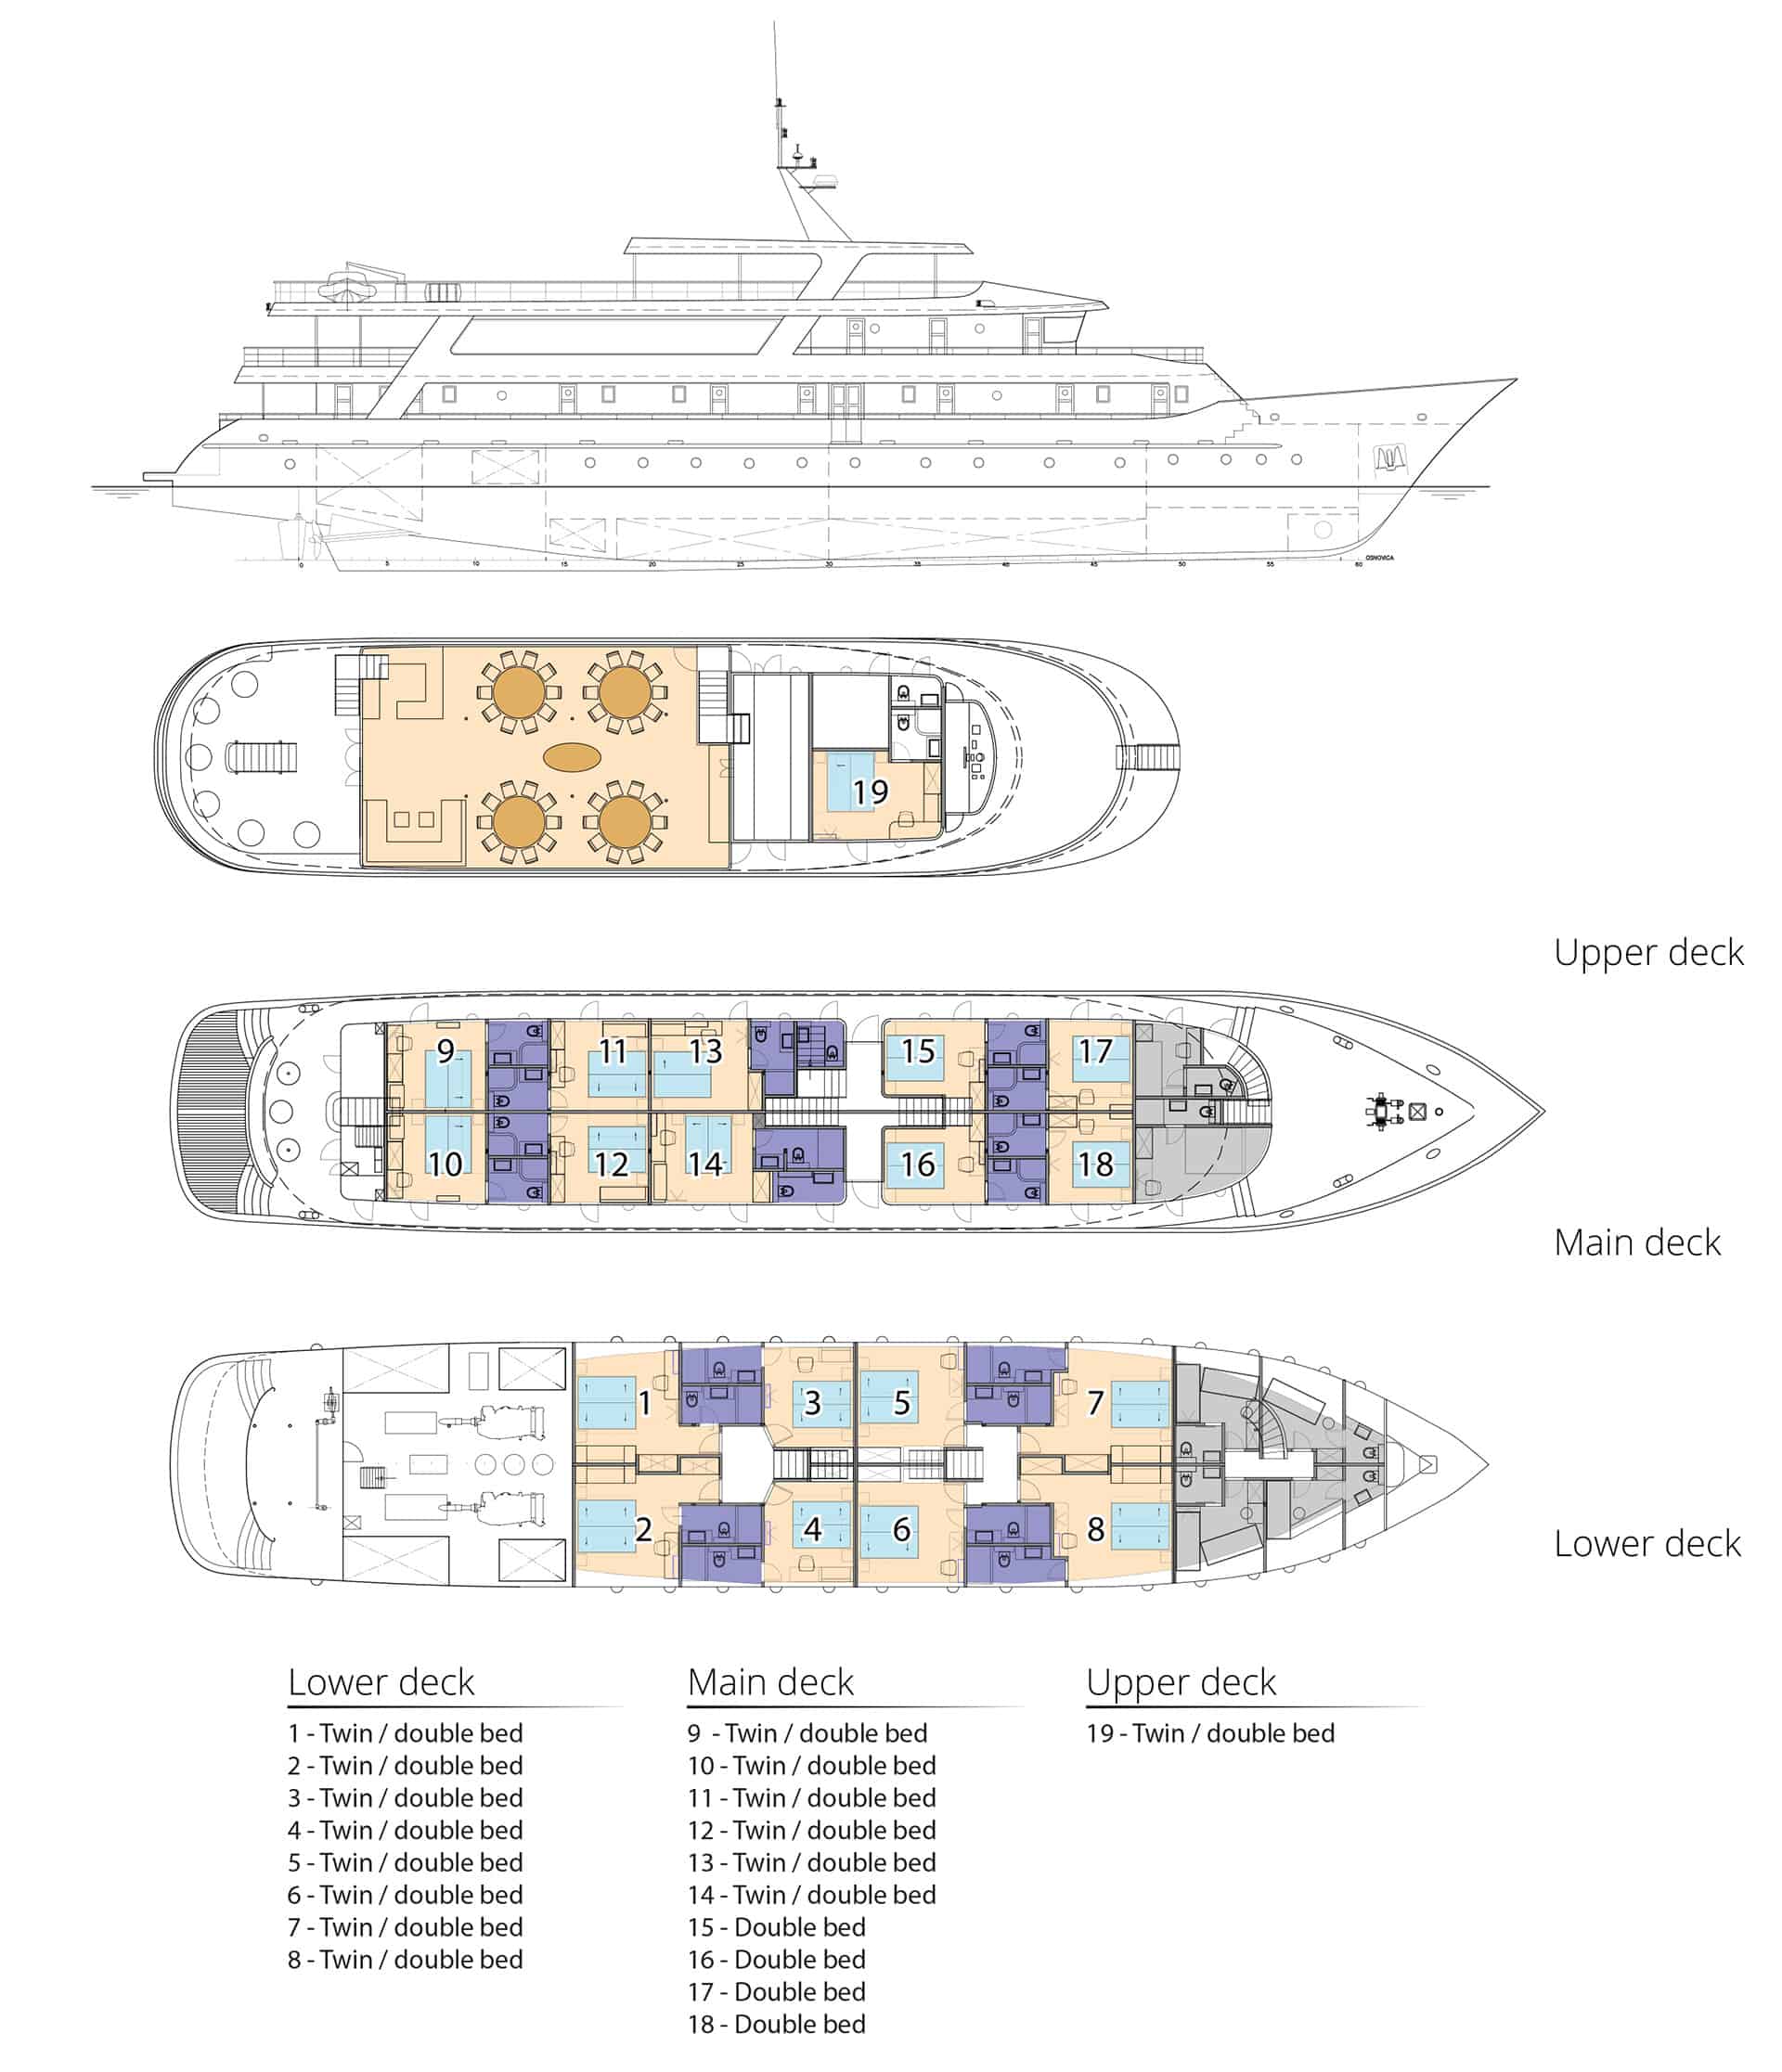 Deck plan of Mediterranean yacht Adriatic Sky showing 19 cabins across 3 passenger decks.